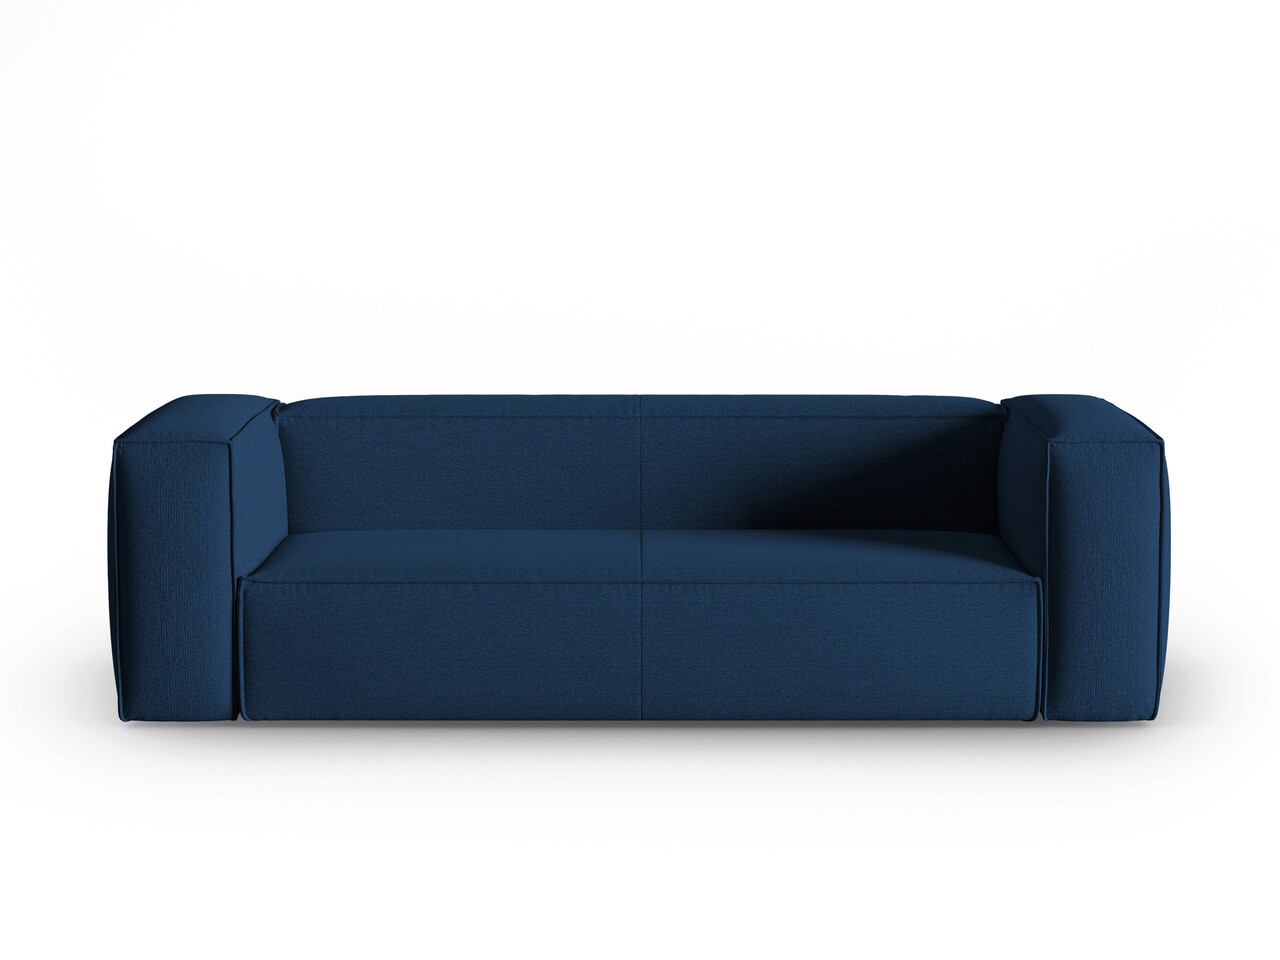 Canapea 4 locuri, Mackay, Cosmopolitan Design, 230x94x73 cm, catifea tricotata, albastru inchis